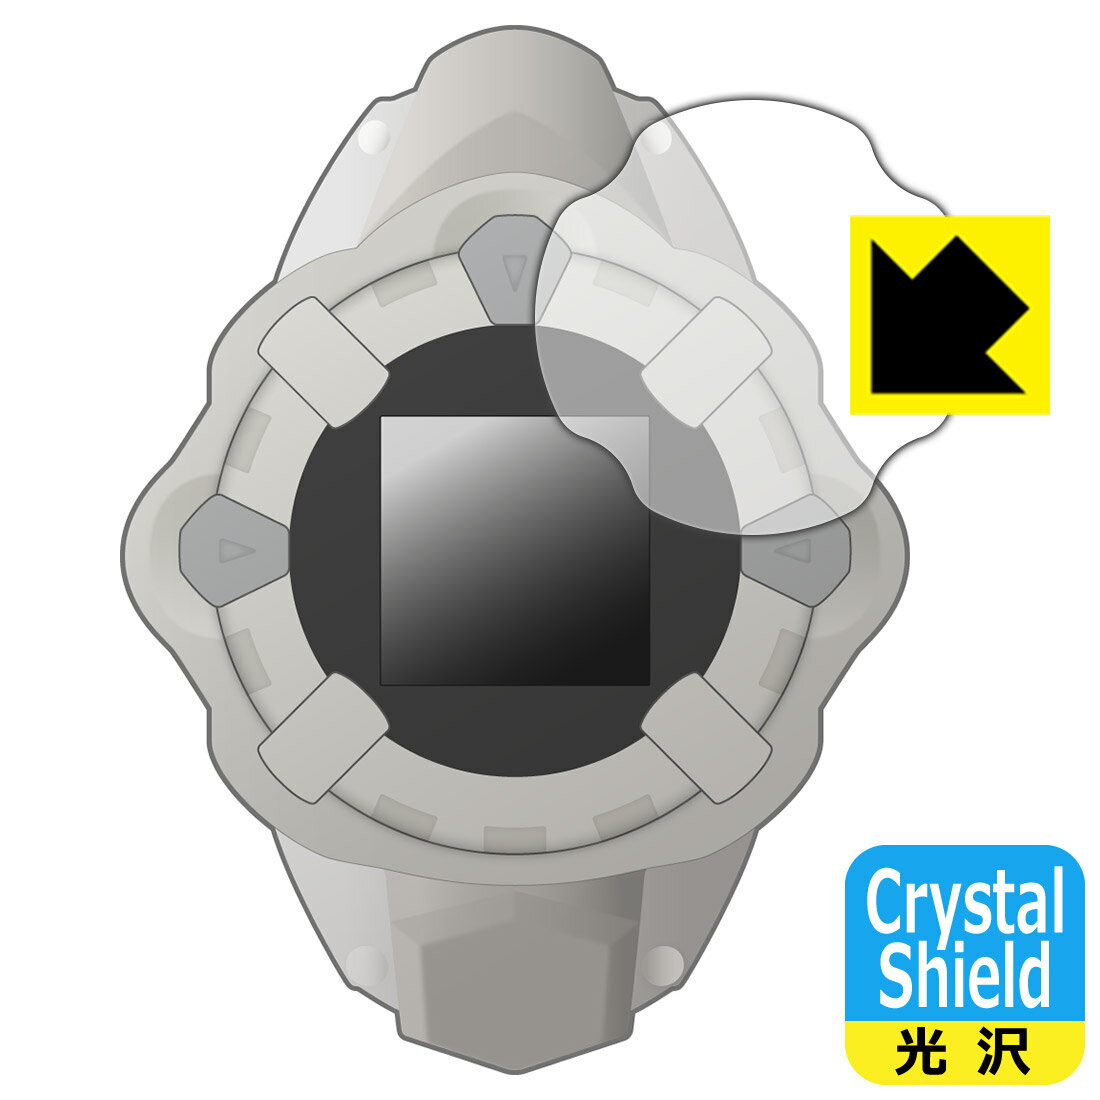 Crystal Shield メダロット メダロッチREVIVALver. 用 液晶保護フィルム 日本製 自社製造直販